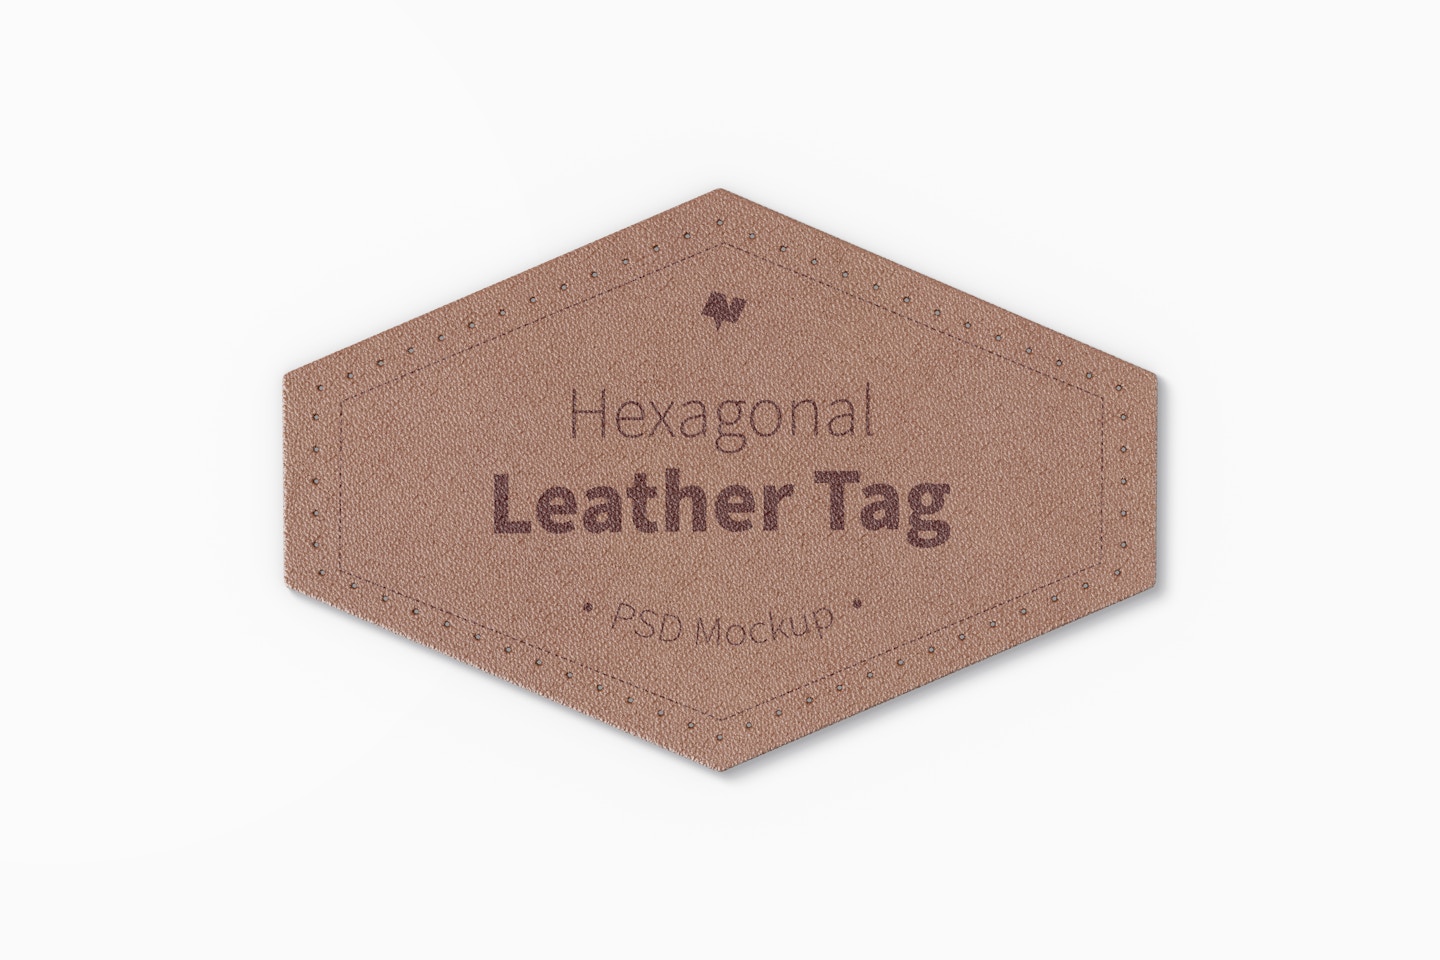 Hexagonal Leather Tag Mockup